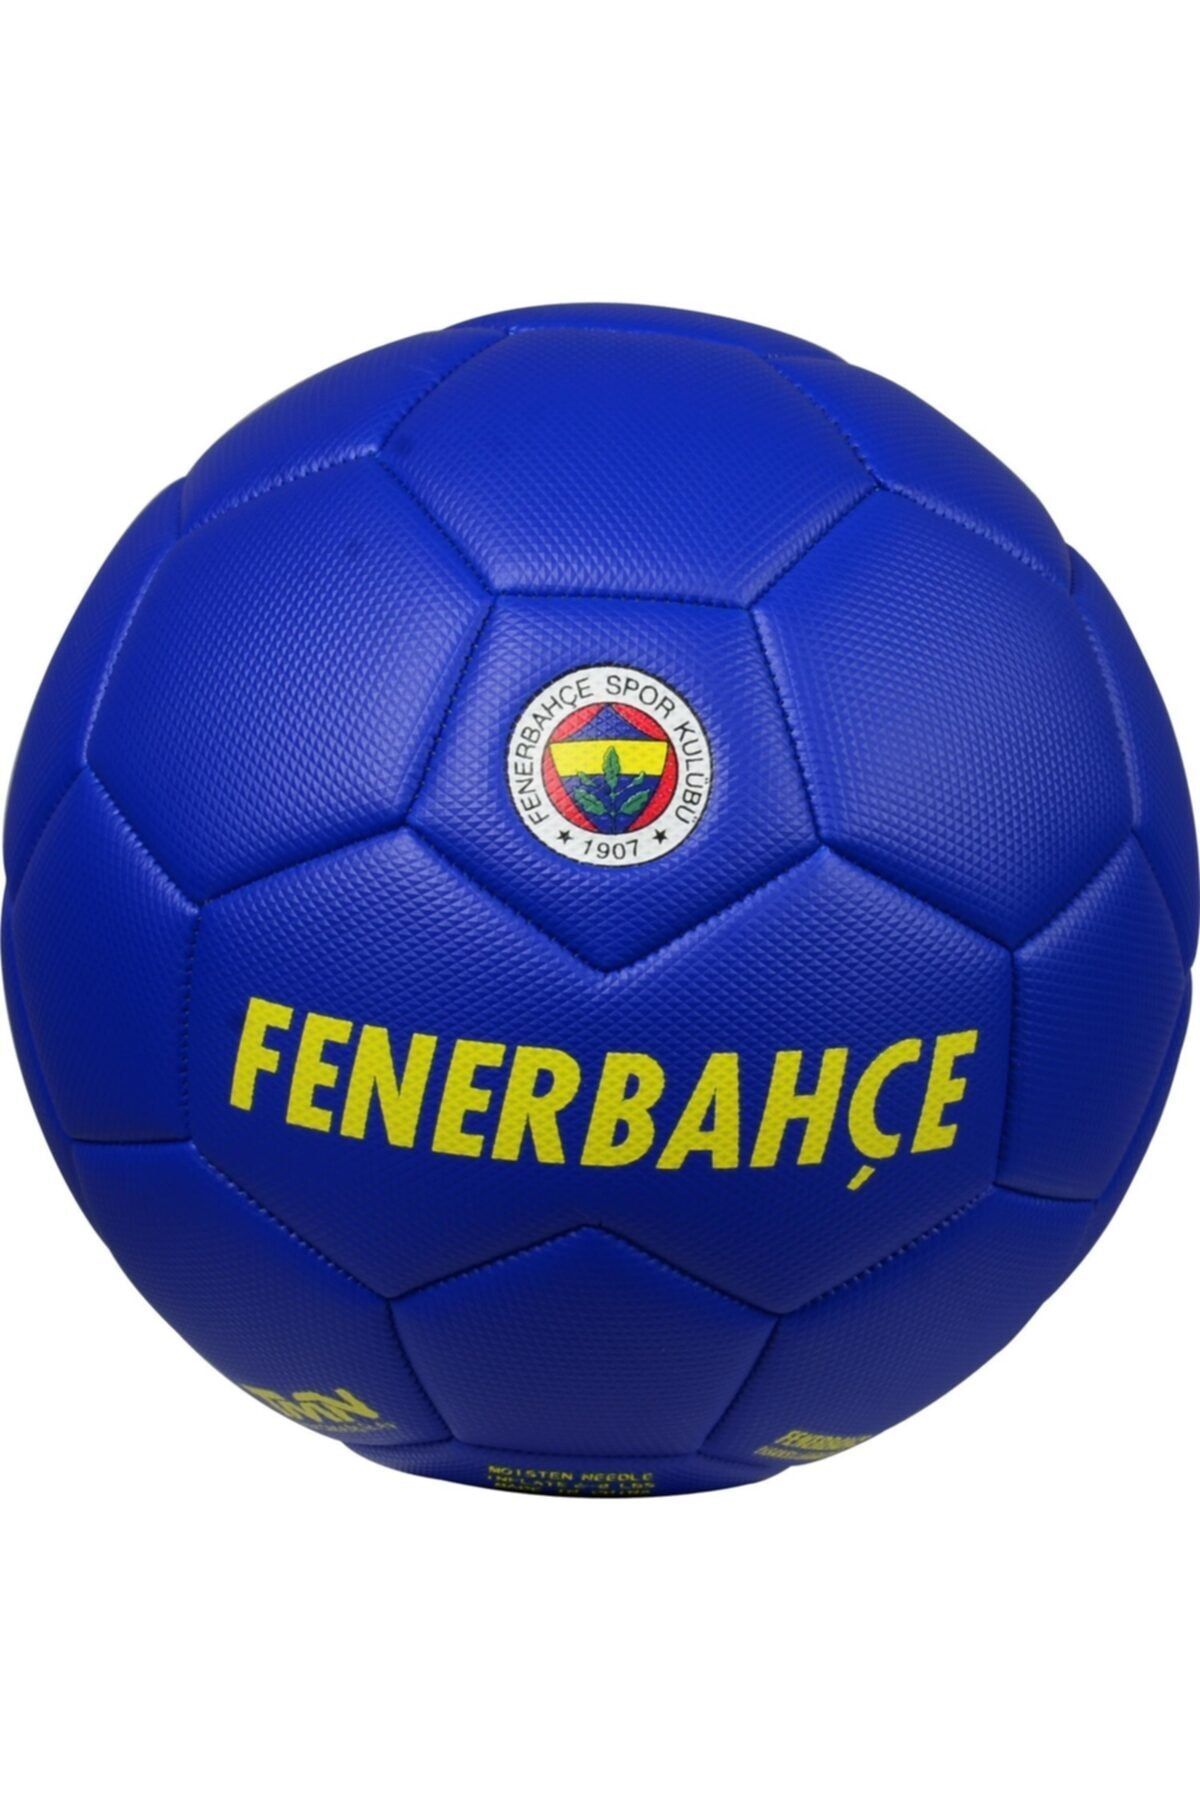 Fenerbahçe Orjinal Lisanslı Futbol Topu No 5